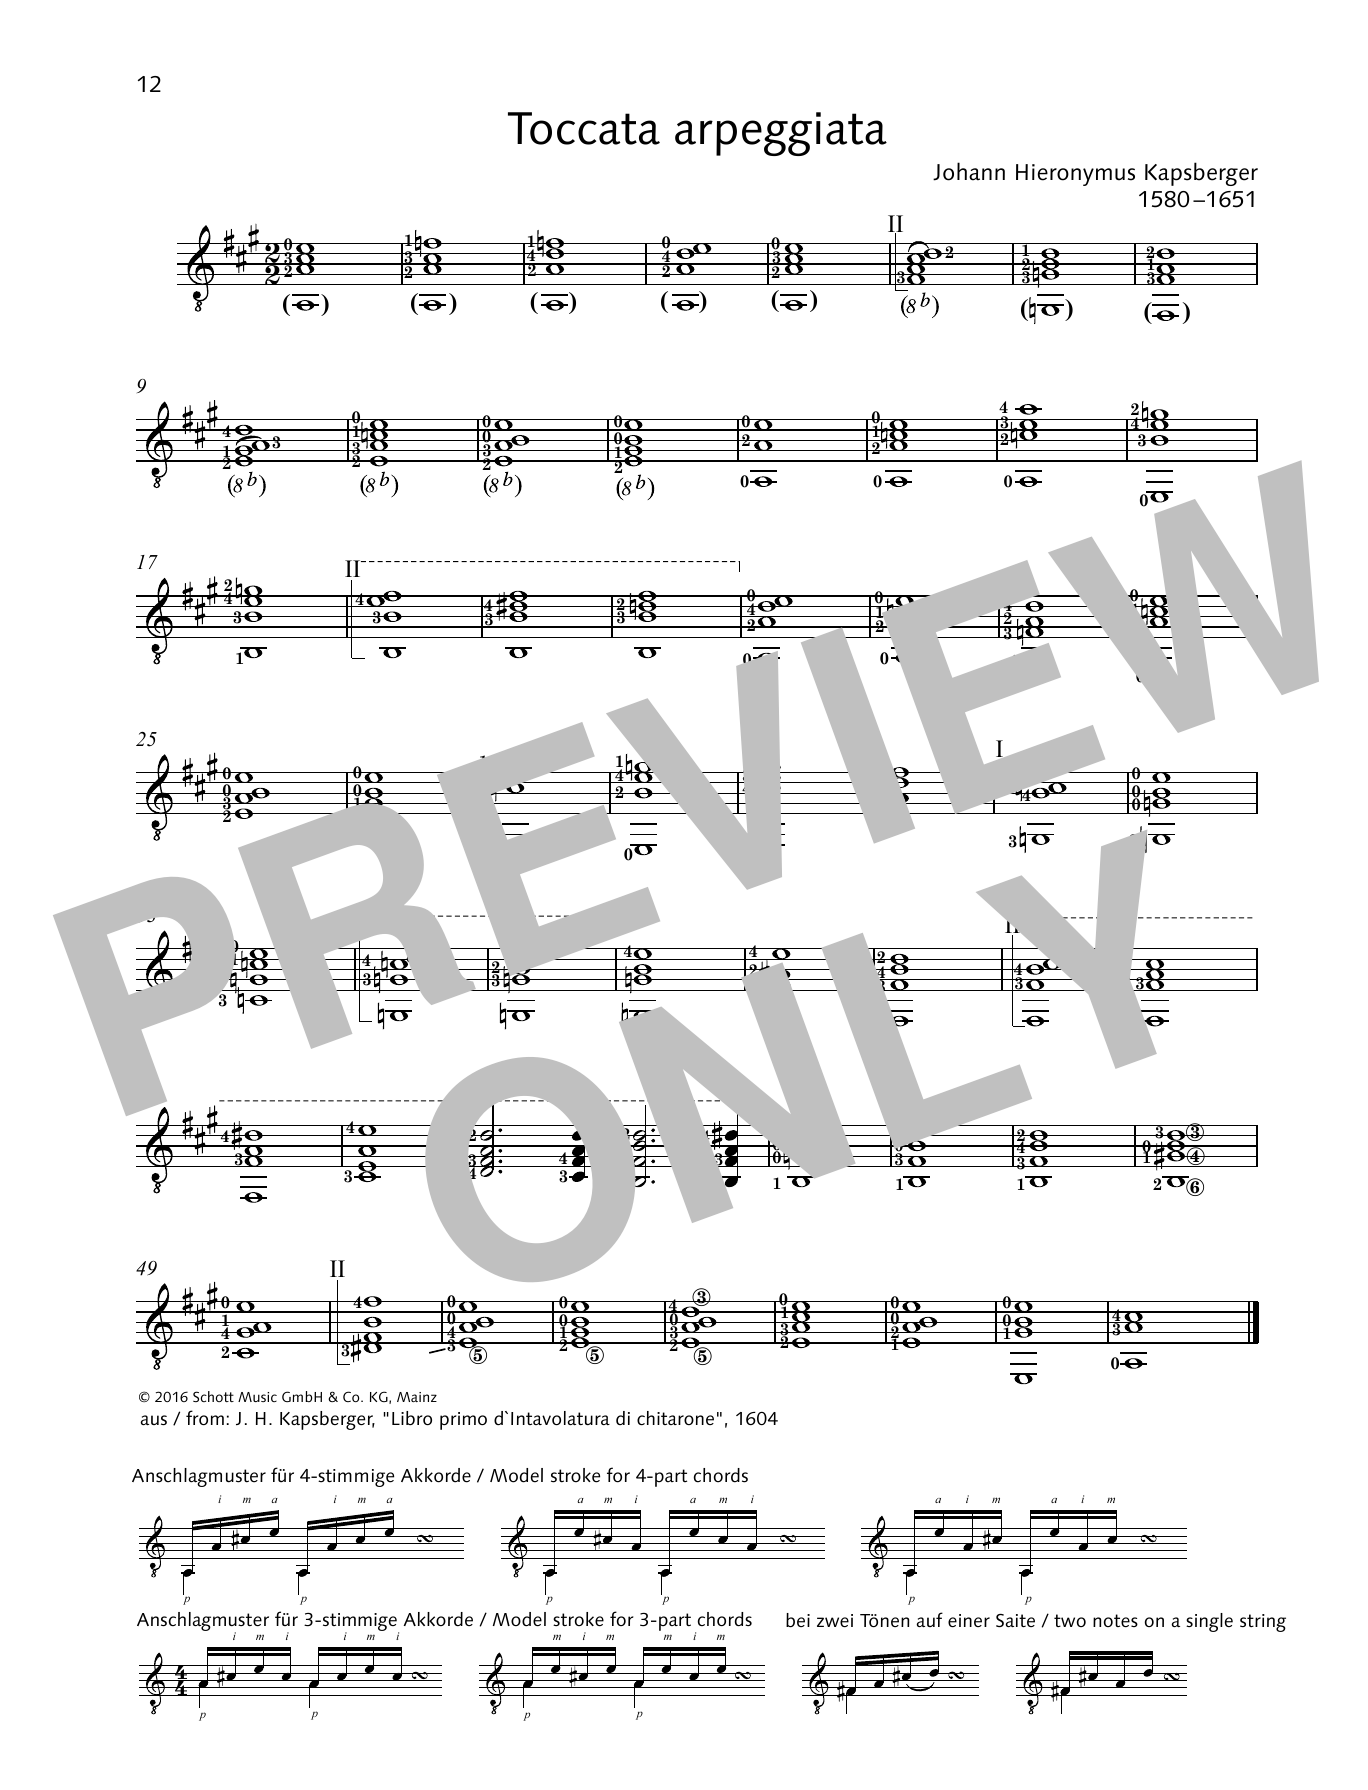 Johannes Hieronymus von Kapsberger Toccata arpeggiata Sheet Music Notes & Chords for Solo Guitar - Download or Print PDF